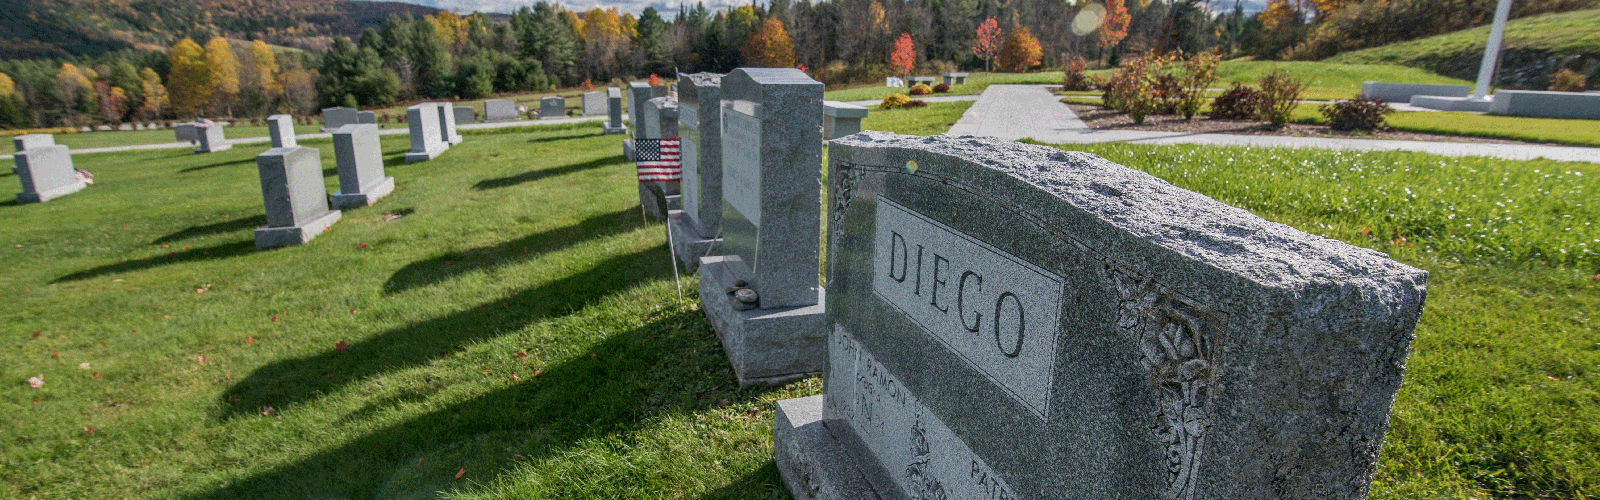 Memorial Plot at the NU Cemetery